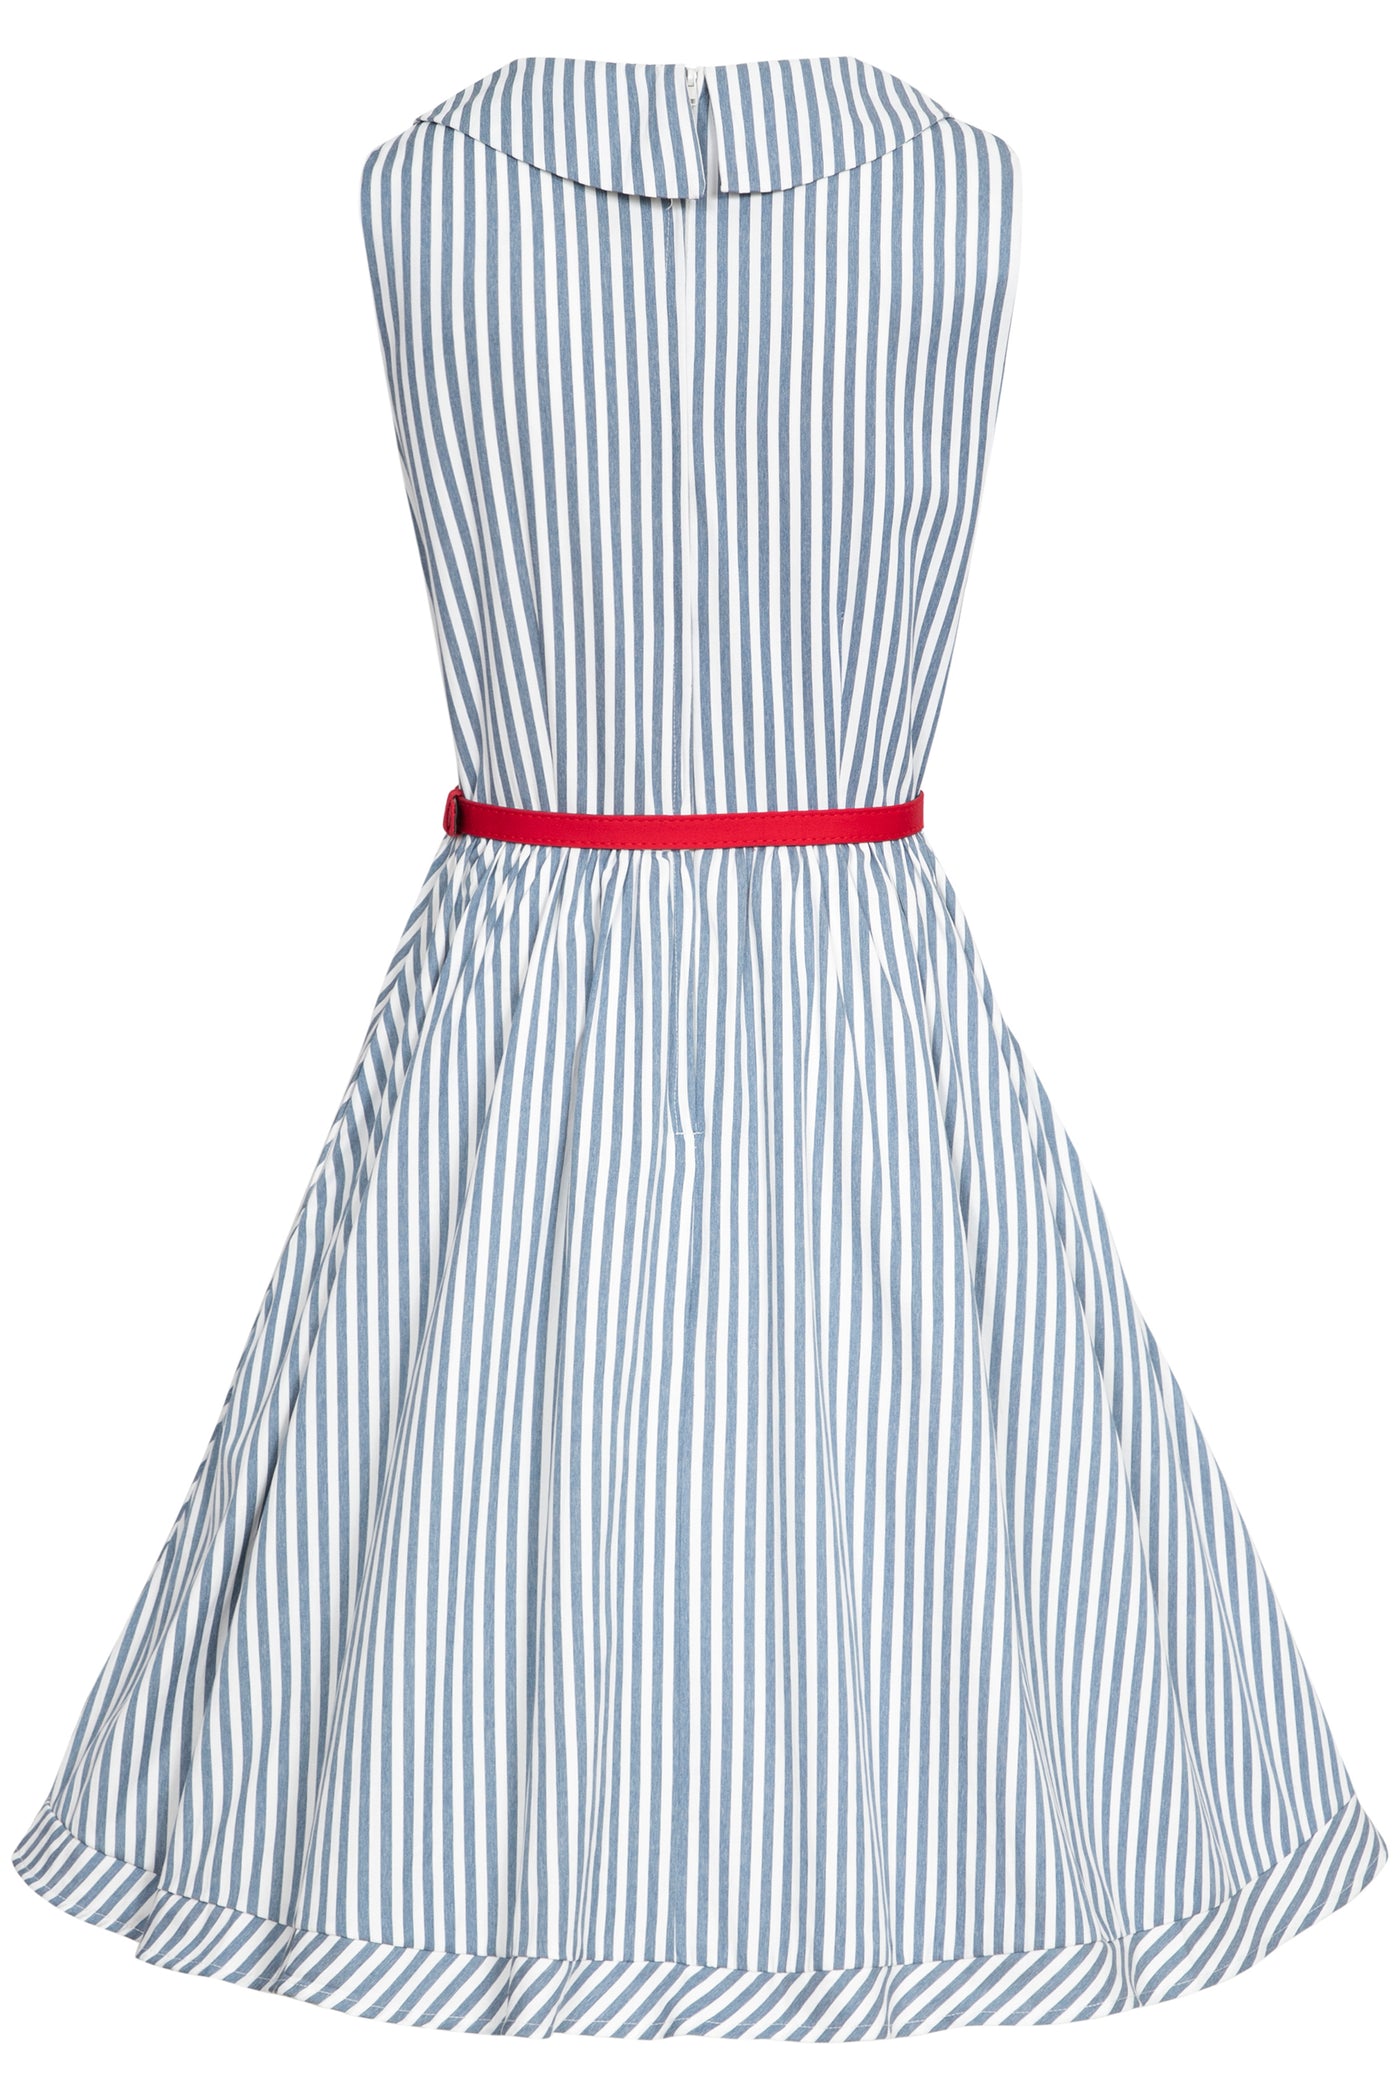 Woman's 50s Style Blue Pinstriped Shirt Dress